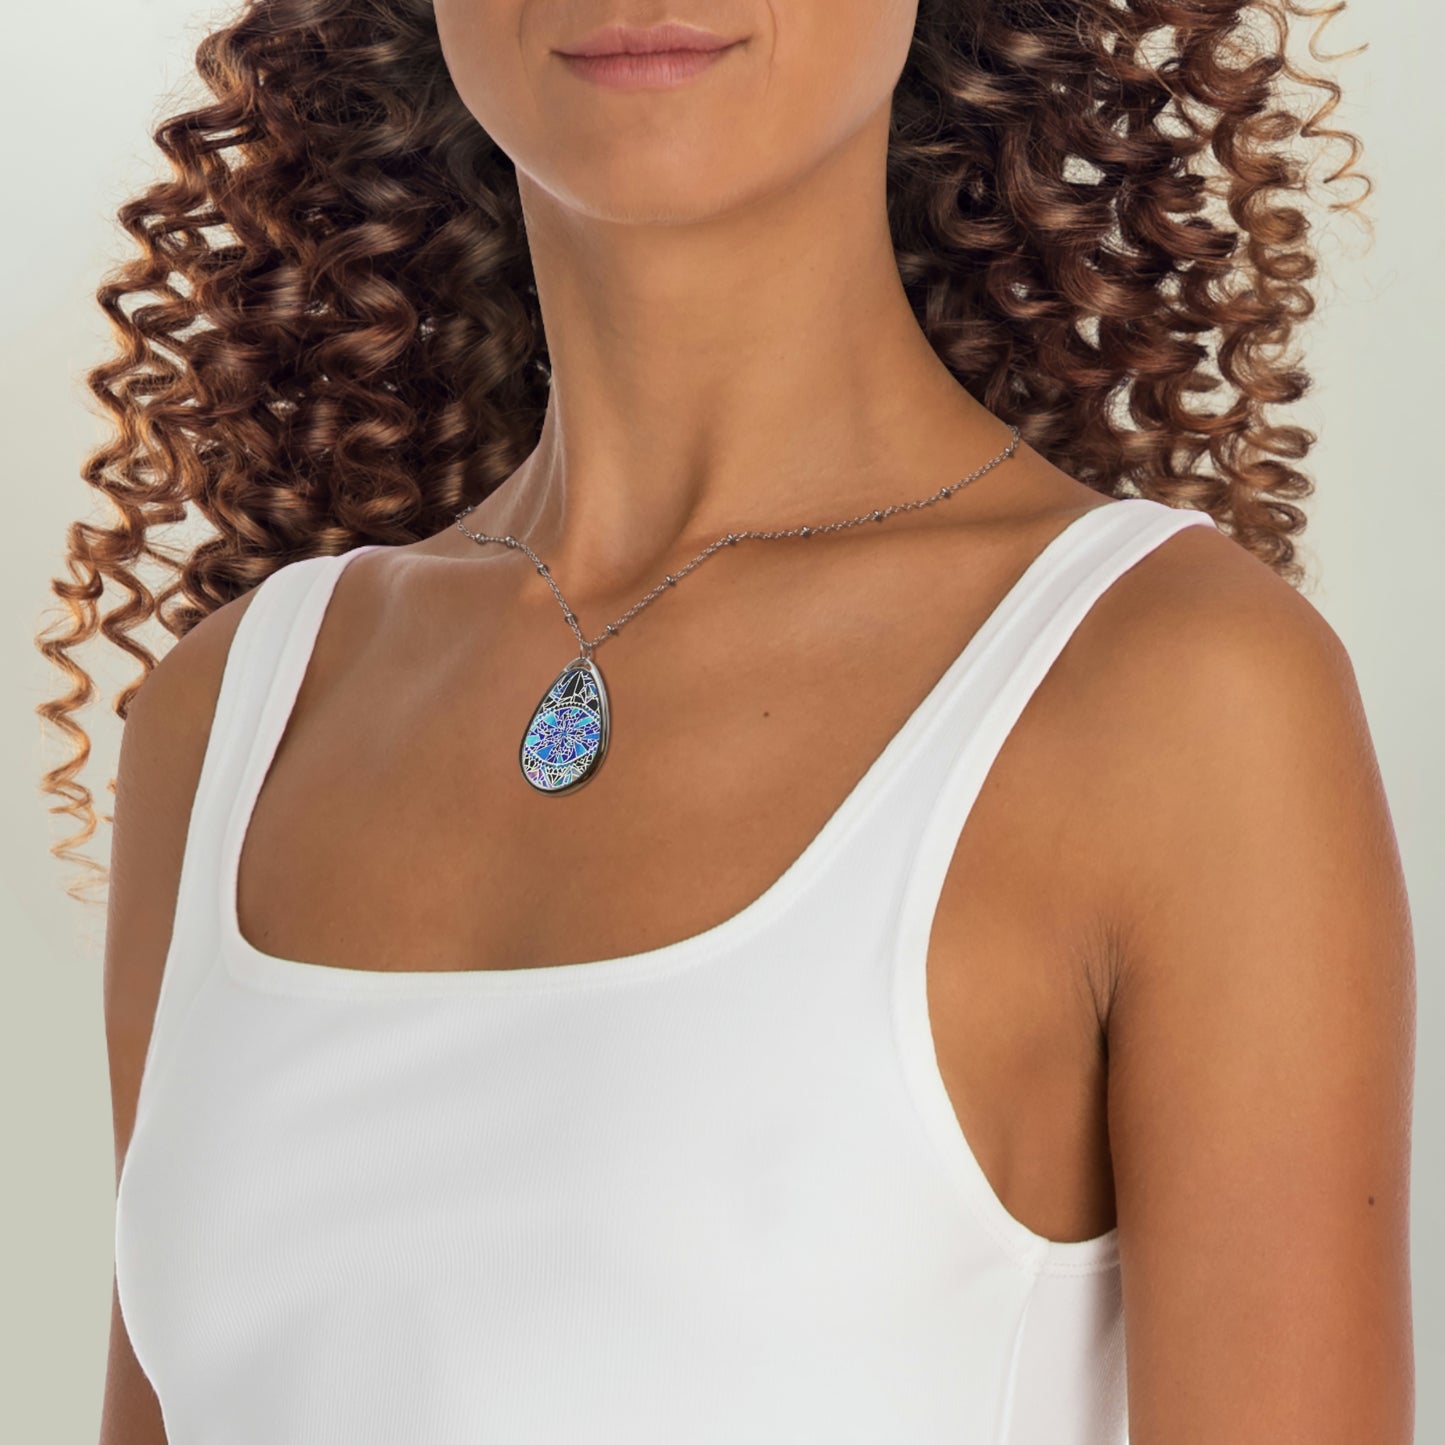 Glass Mosaic Blue Dragon Eye Art Oval Necklace Teardrop Pendant Jewelry